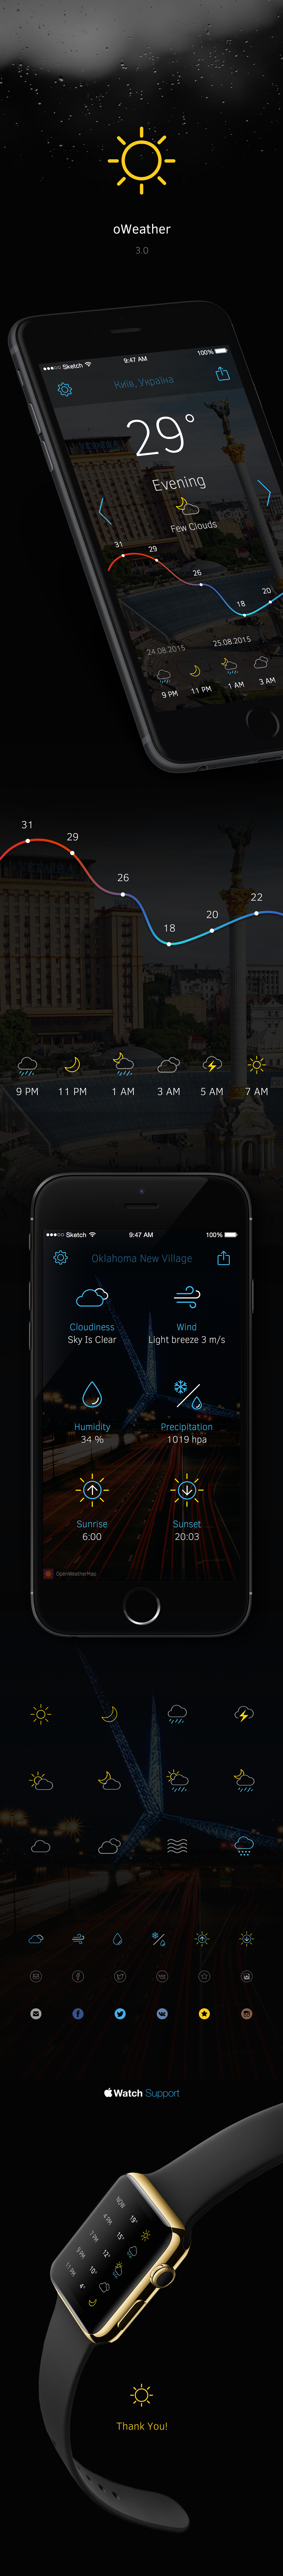 iphone weather oweather app application forecast artsvit weatherapp